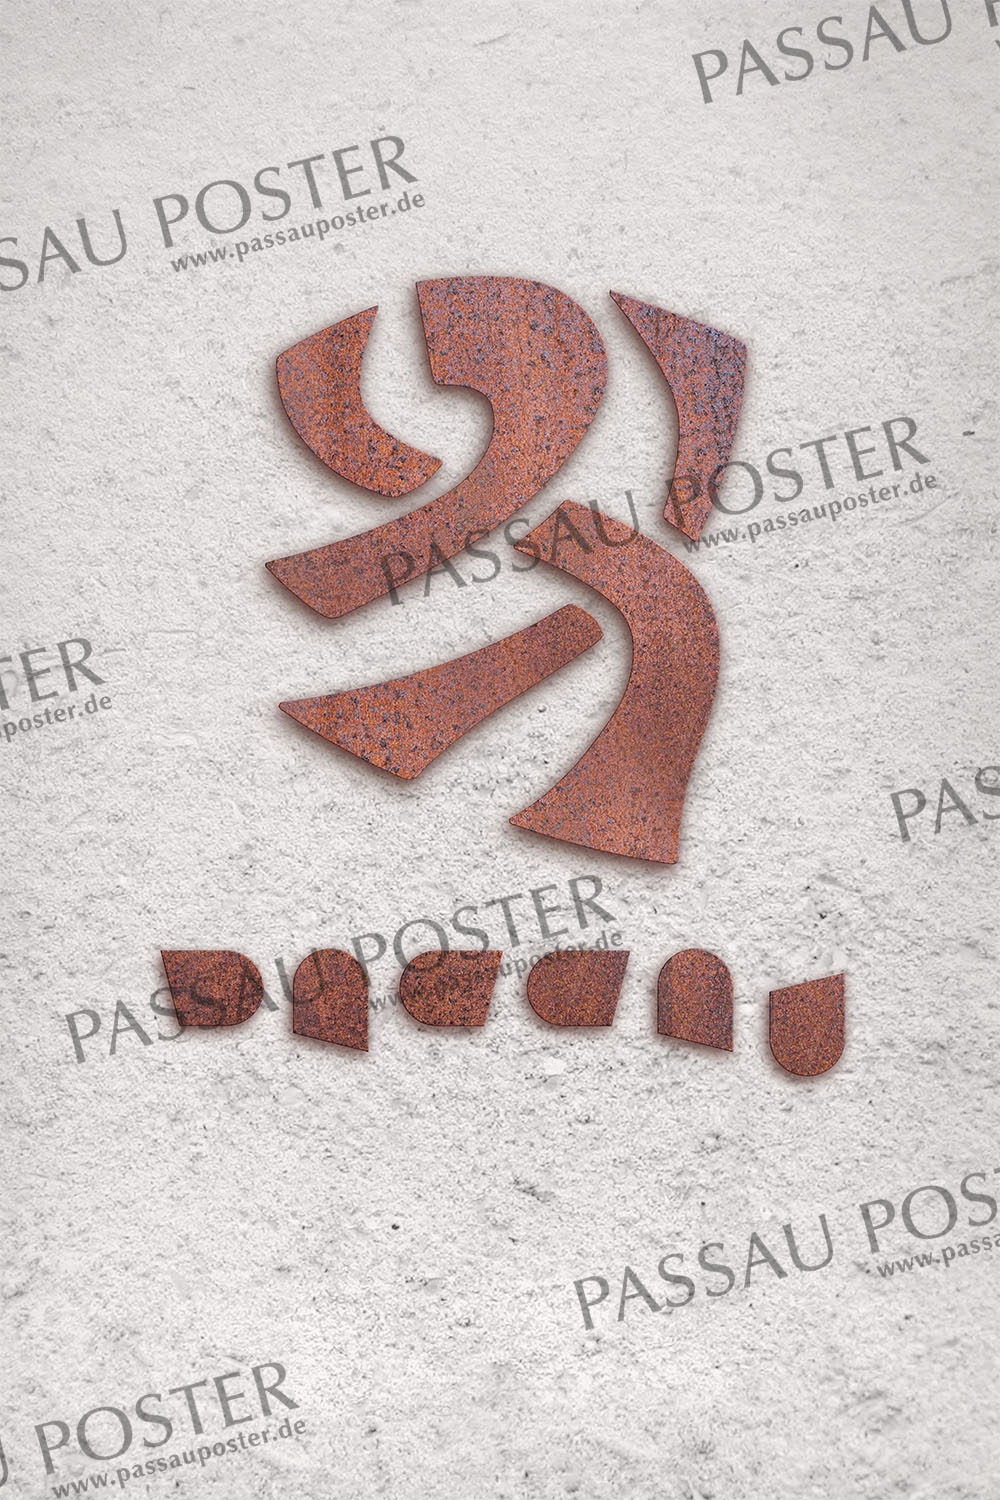 Passau Poster - Passauer Wolf